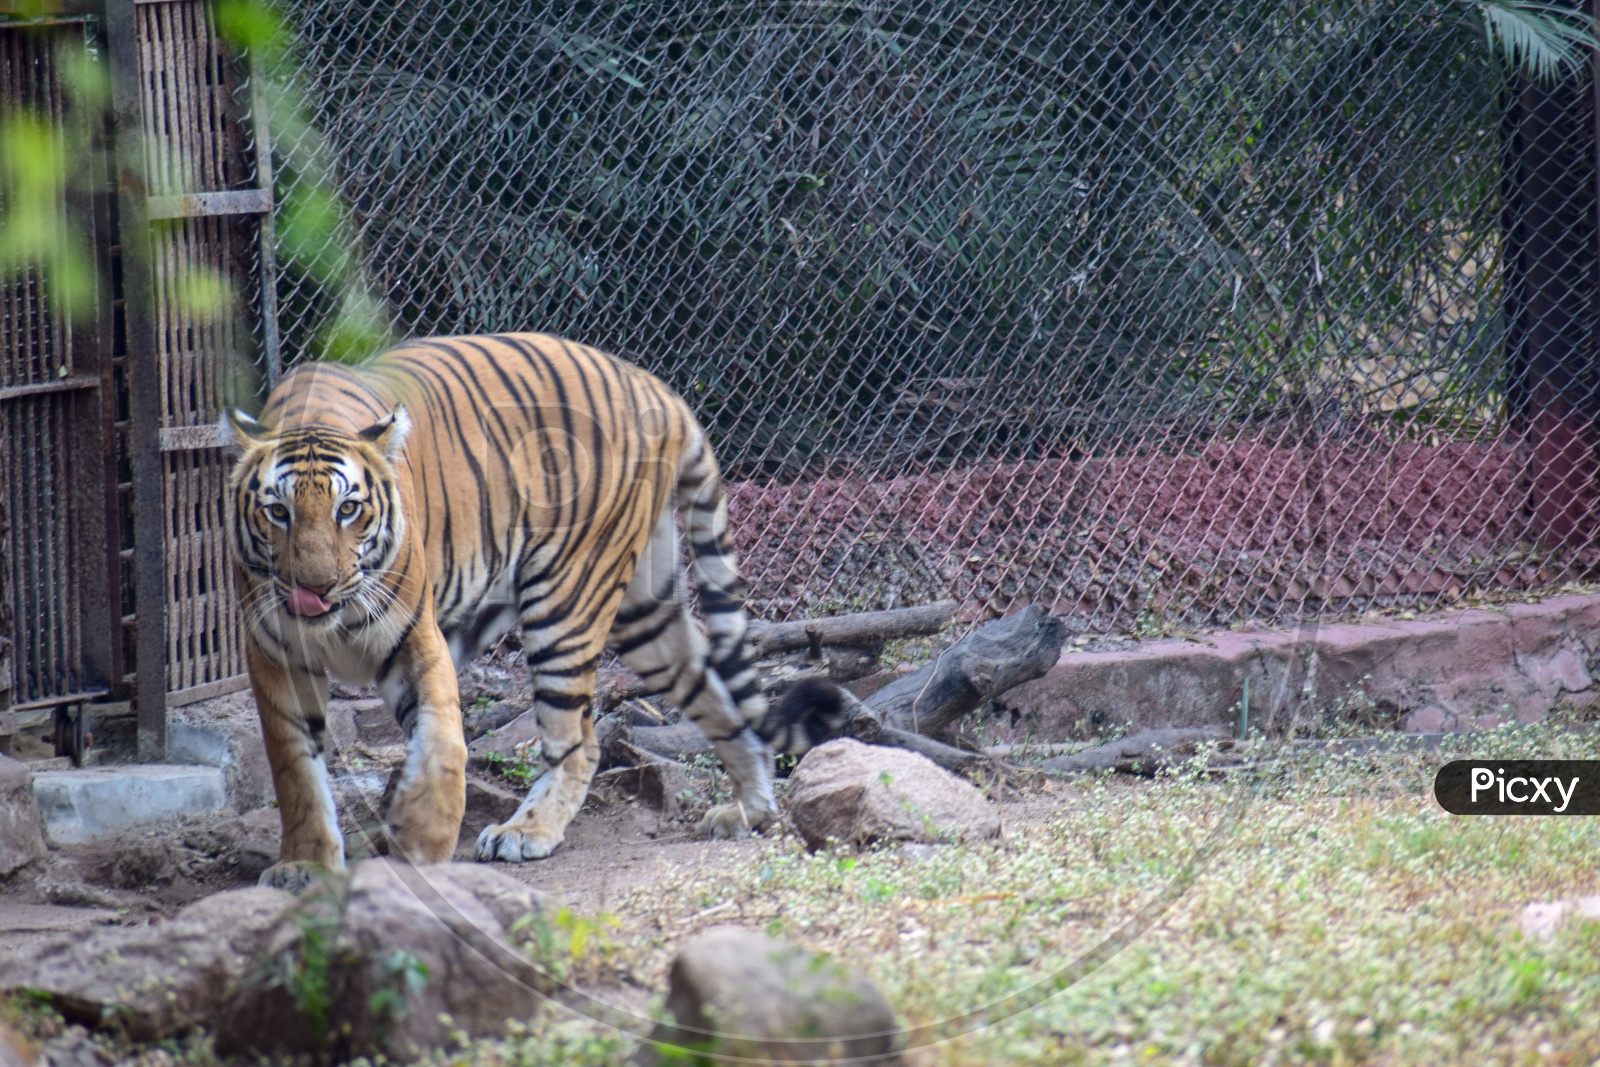 Royal Bengal Tiger - Name's enough!